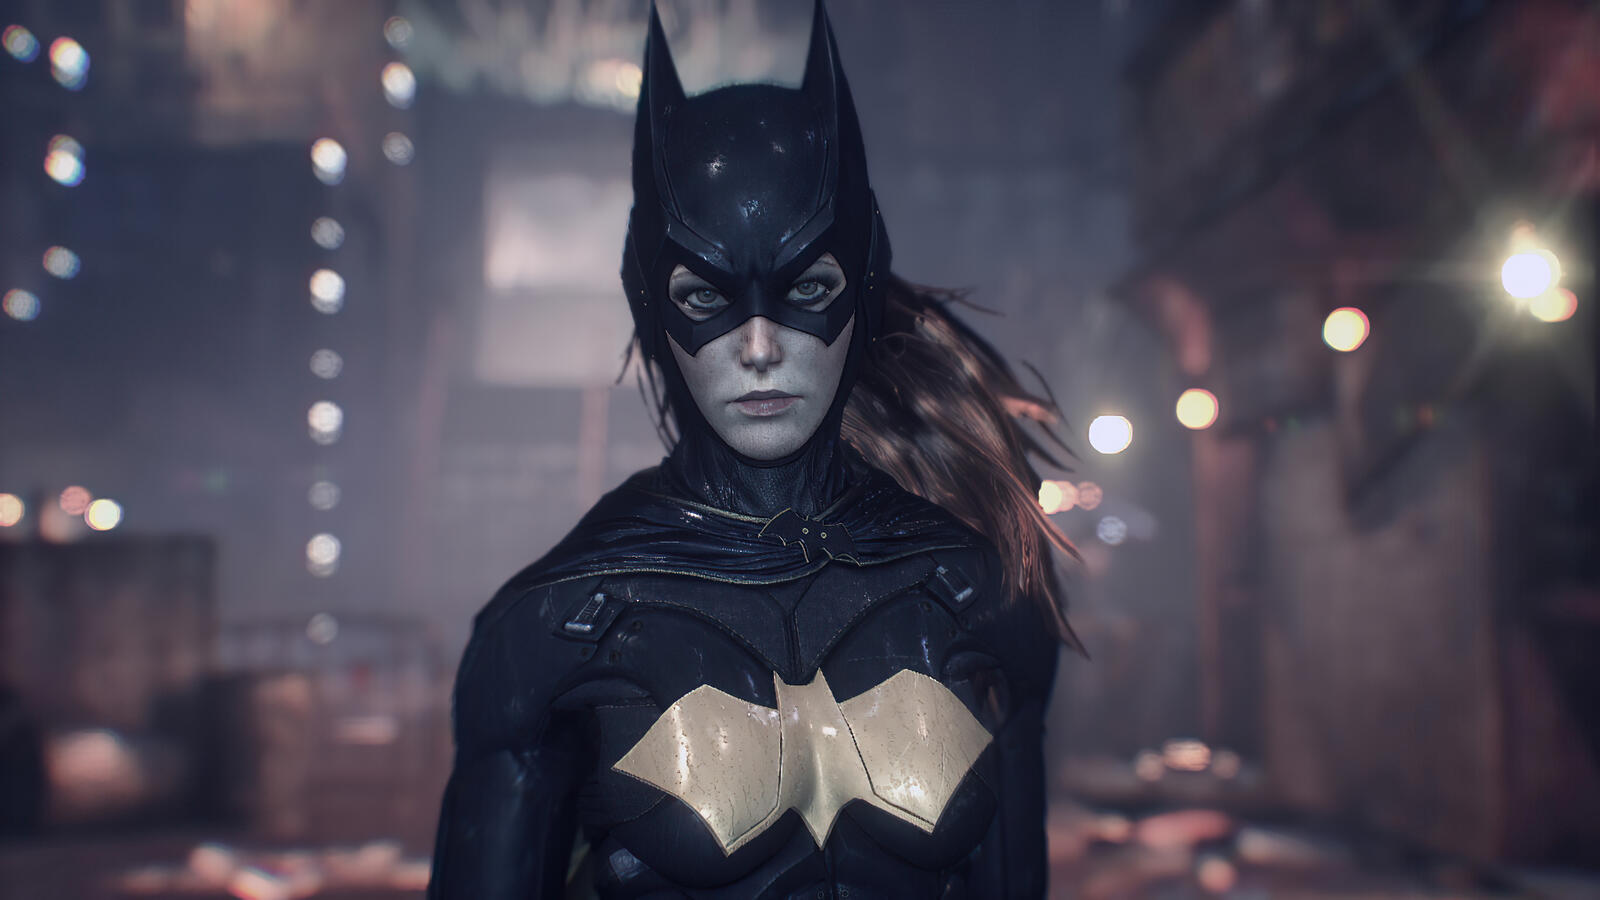 Wallpapers batgirl Batman: Arkham Knight games on the desktop